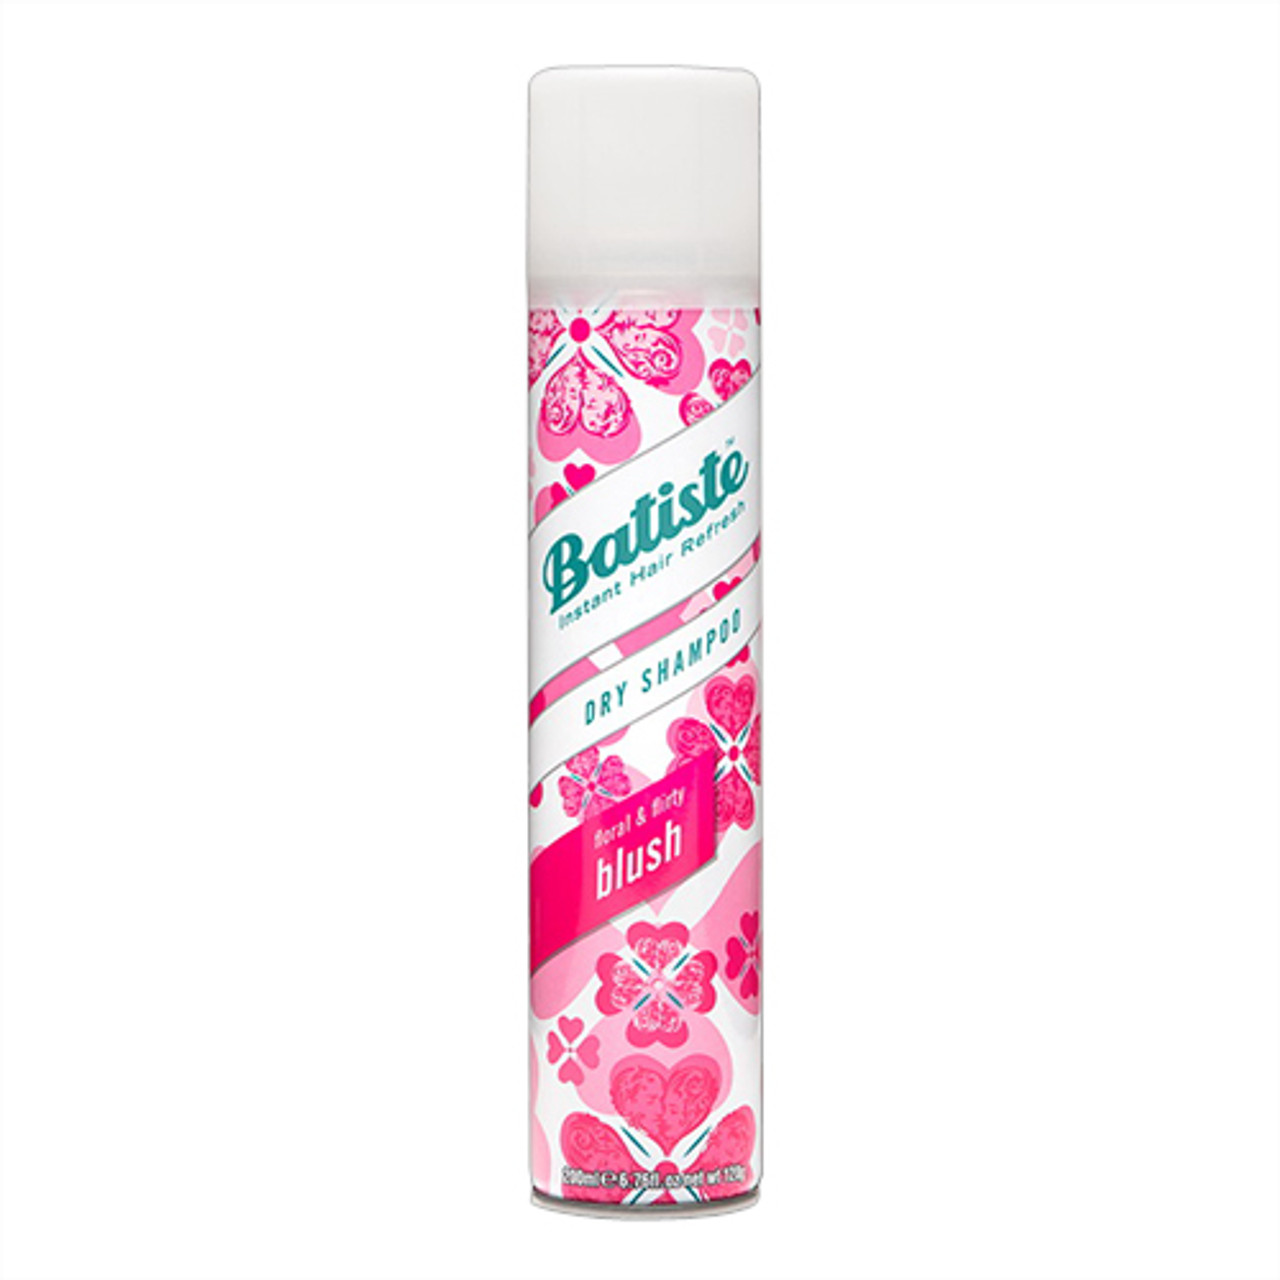 Dry Hair Shampoo, Floral and Flirty Blush - 6.76 - myotcstore.com